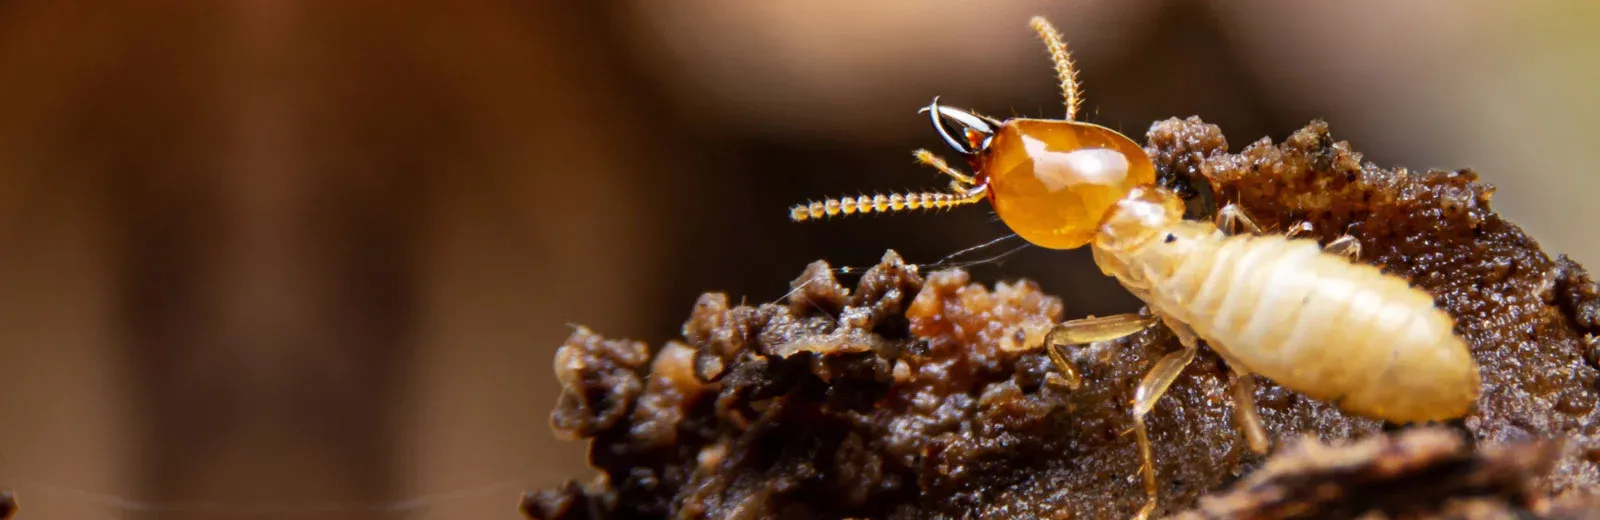 Closeup image of a termite